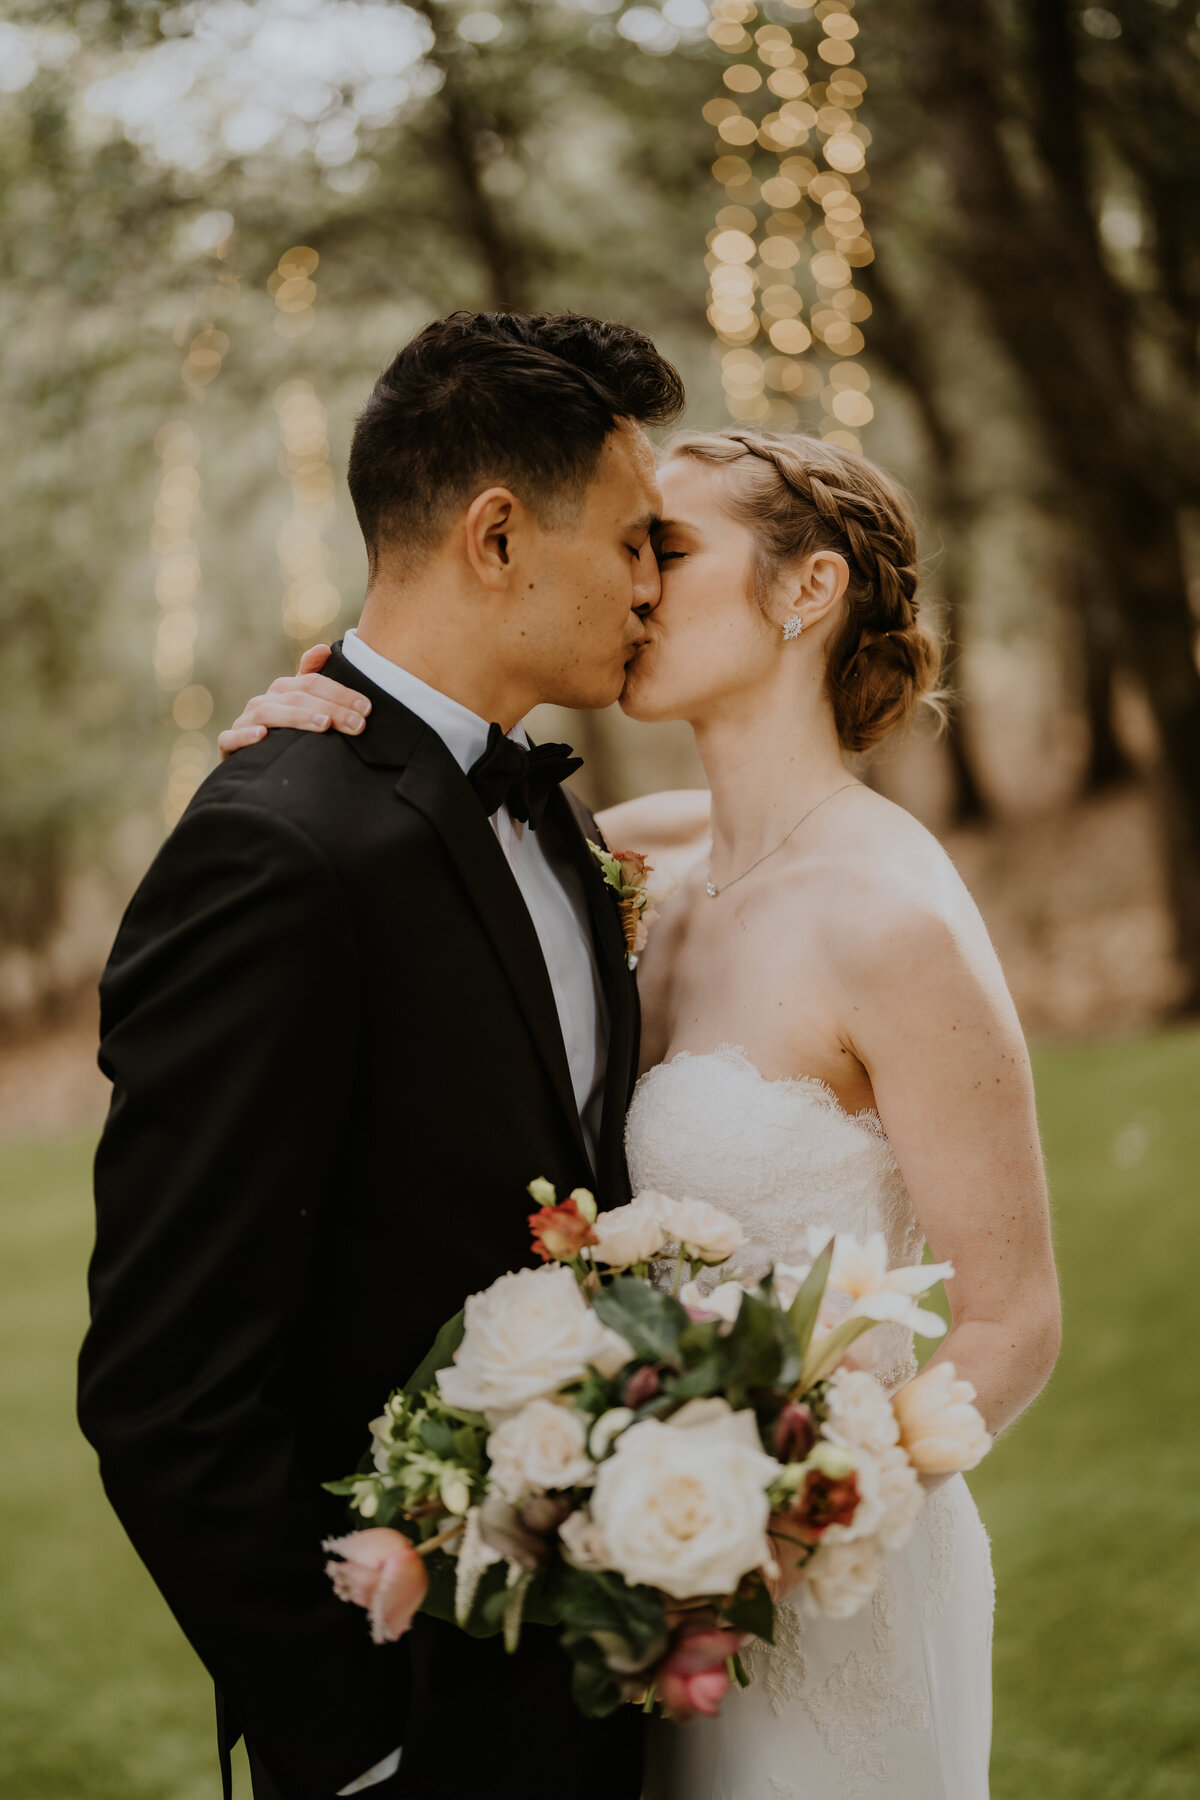 Temecula, California Wedding photographer Yescphotography Bride and Groom kiss